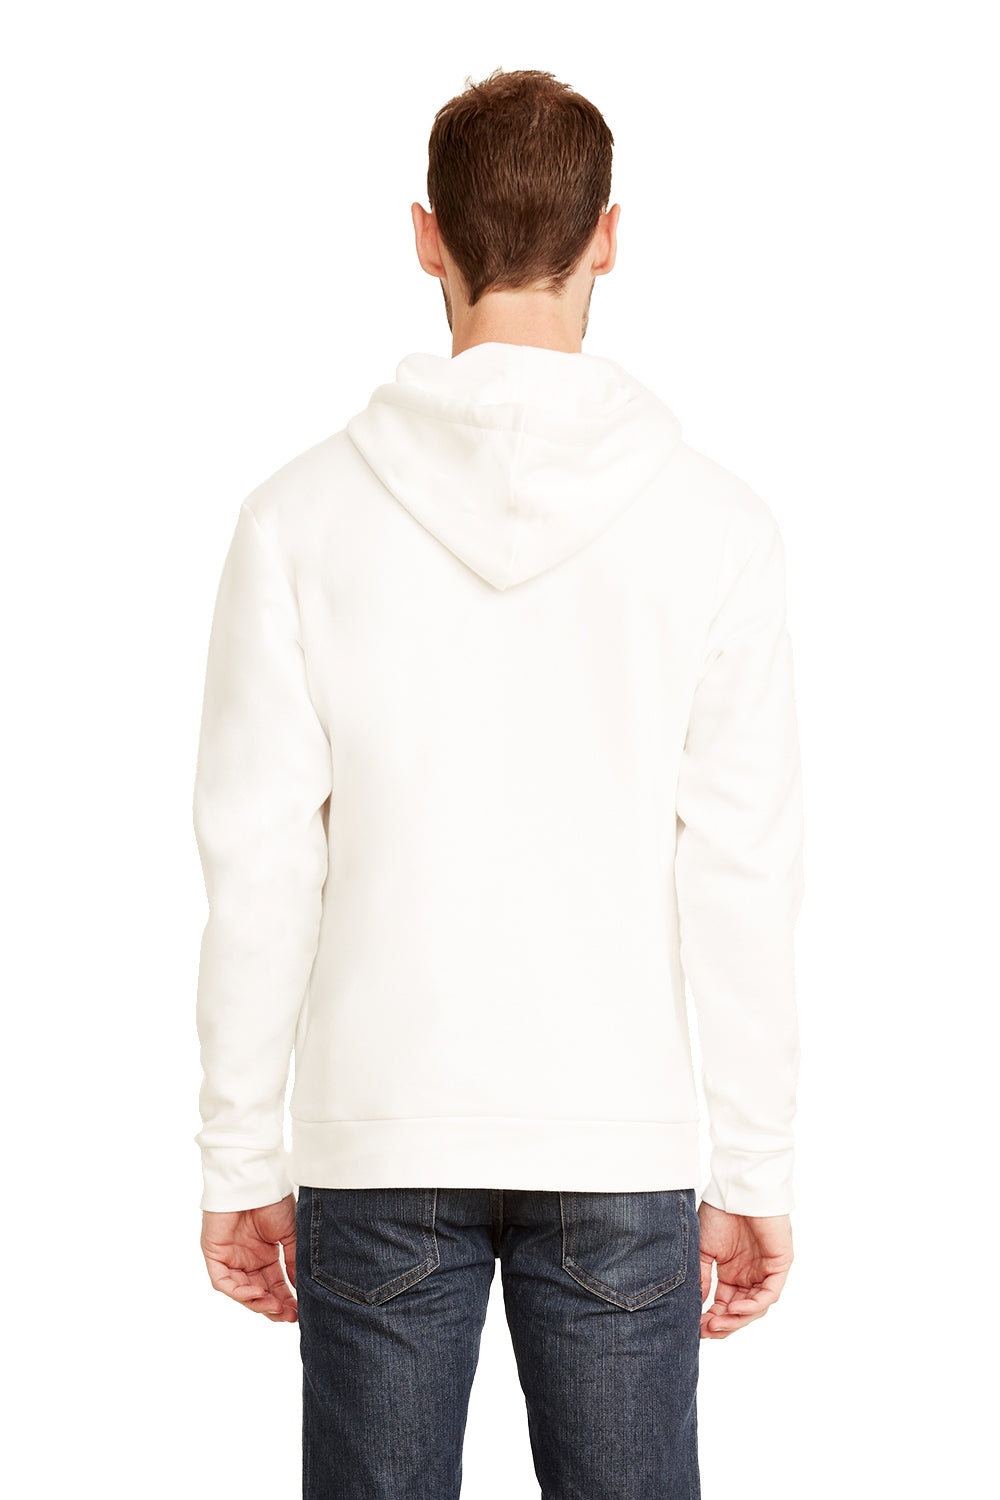 Next Level 9303 Mens Fleece Hooded Sweatshirt Hoodie White Back